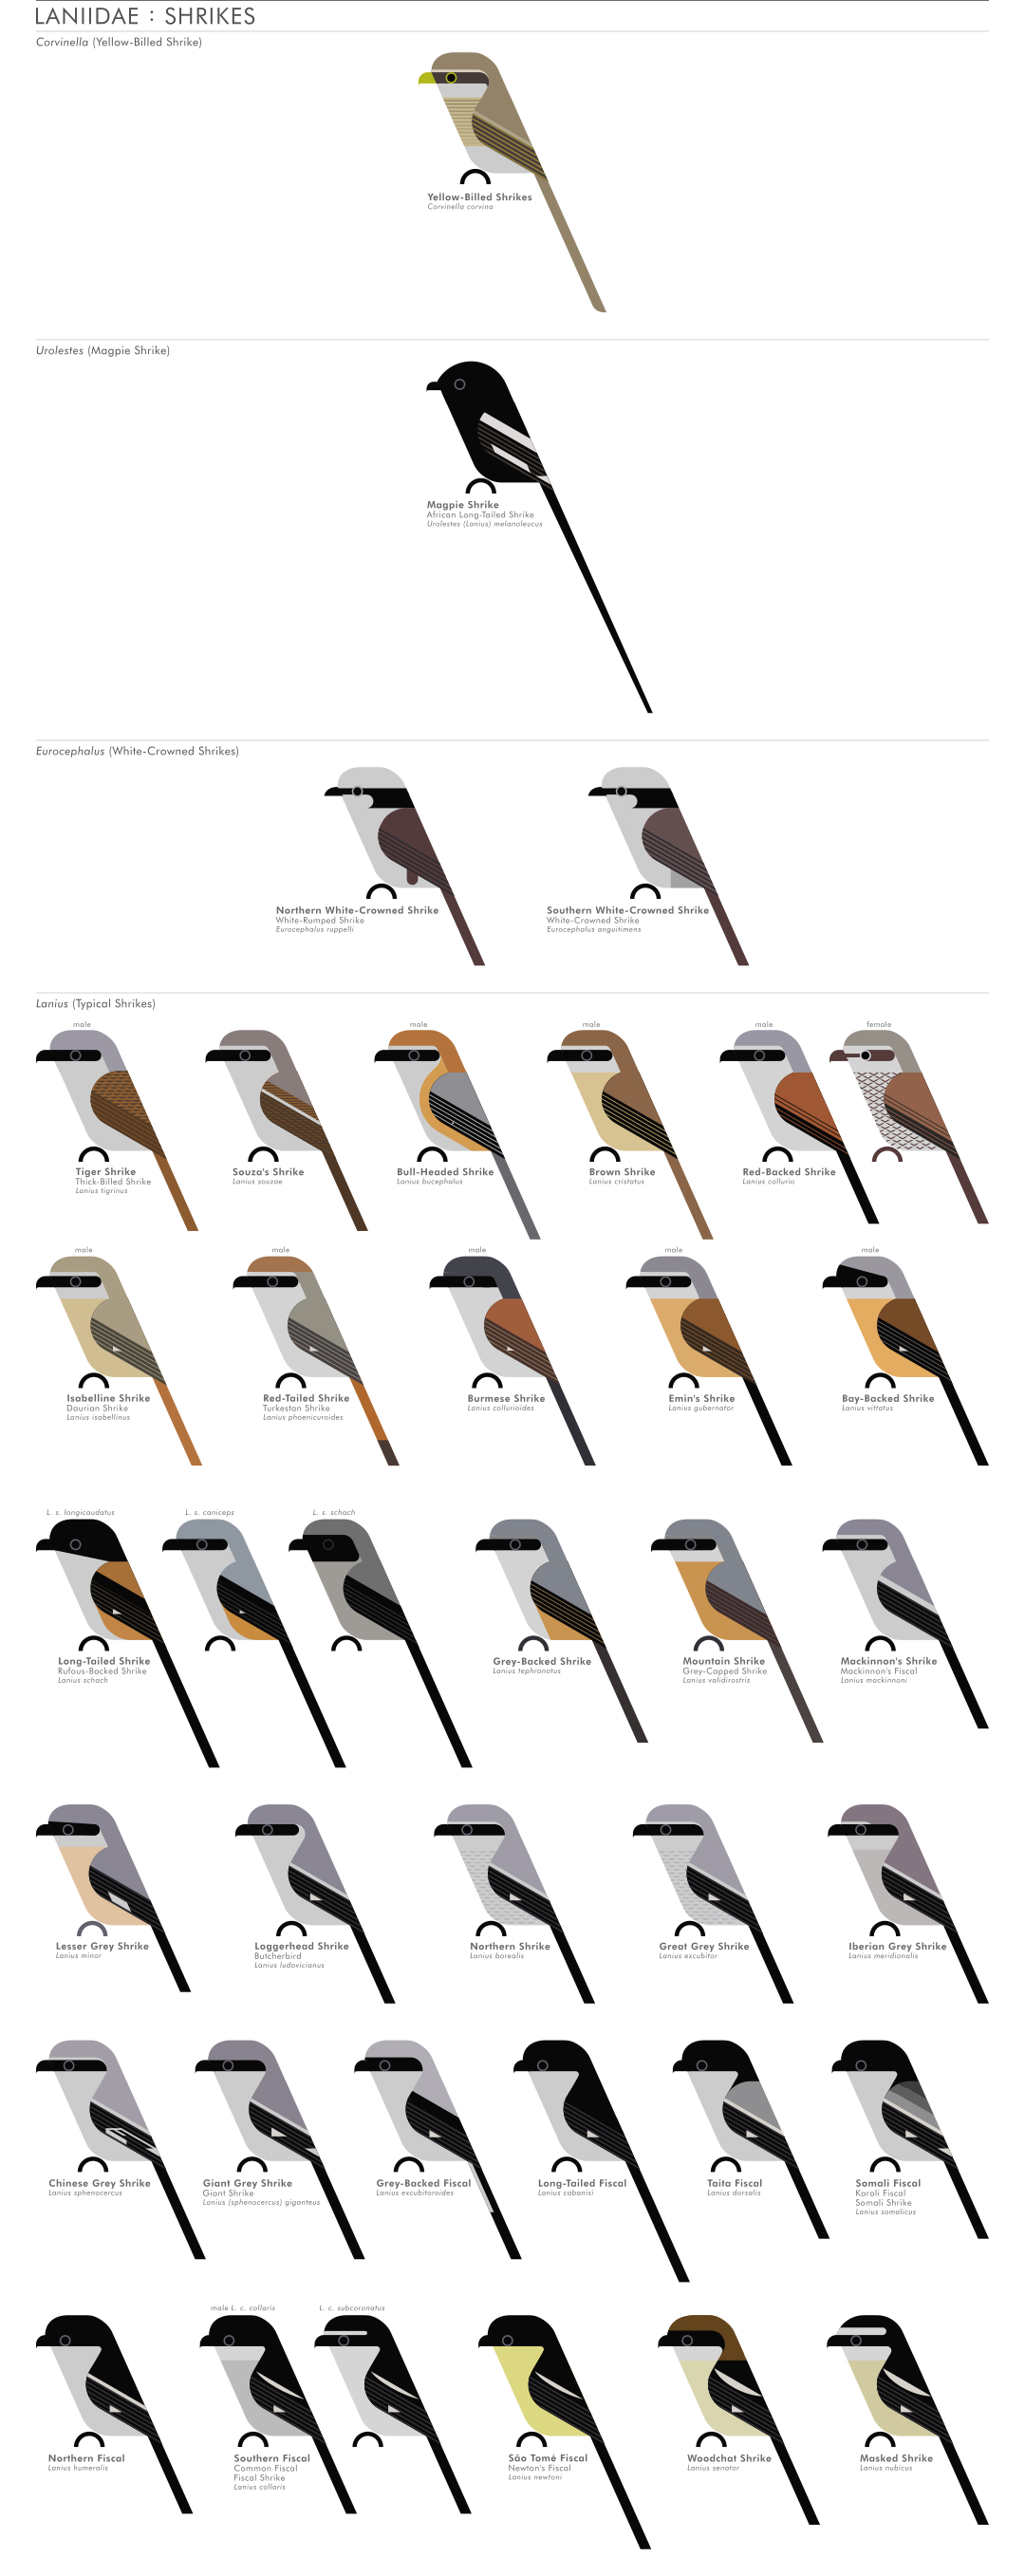 scott partridge - AVE - avian vector encyclopedia - shrikes - bird vector art